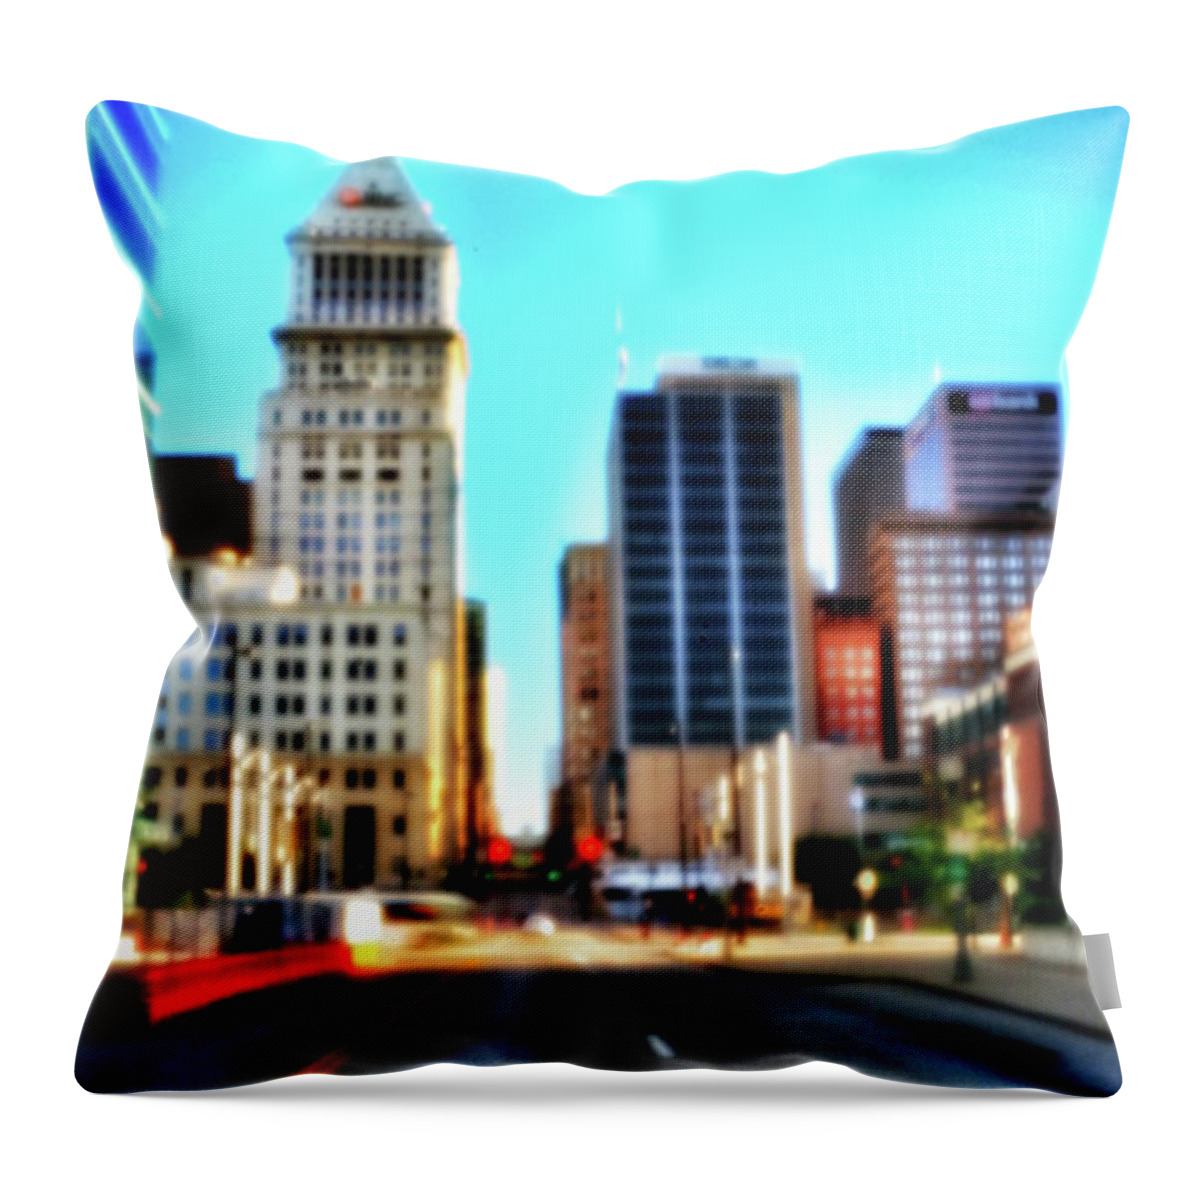  Throw Pillow featuring the photograph Cincinnati Pinhole City by Al Harden